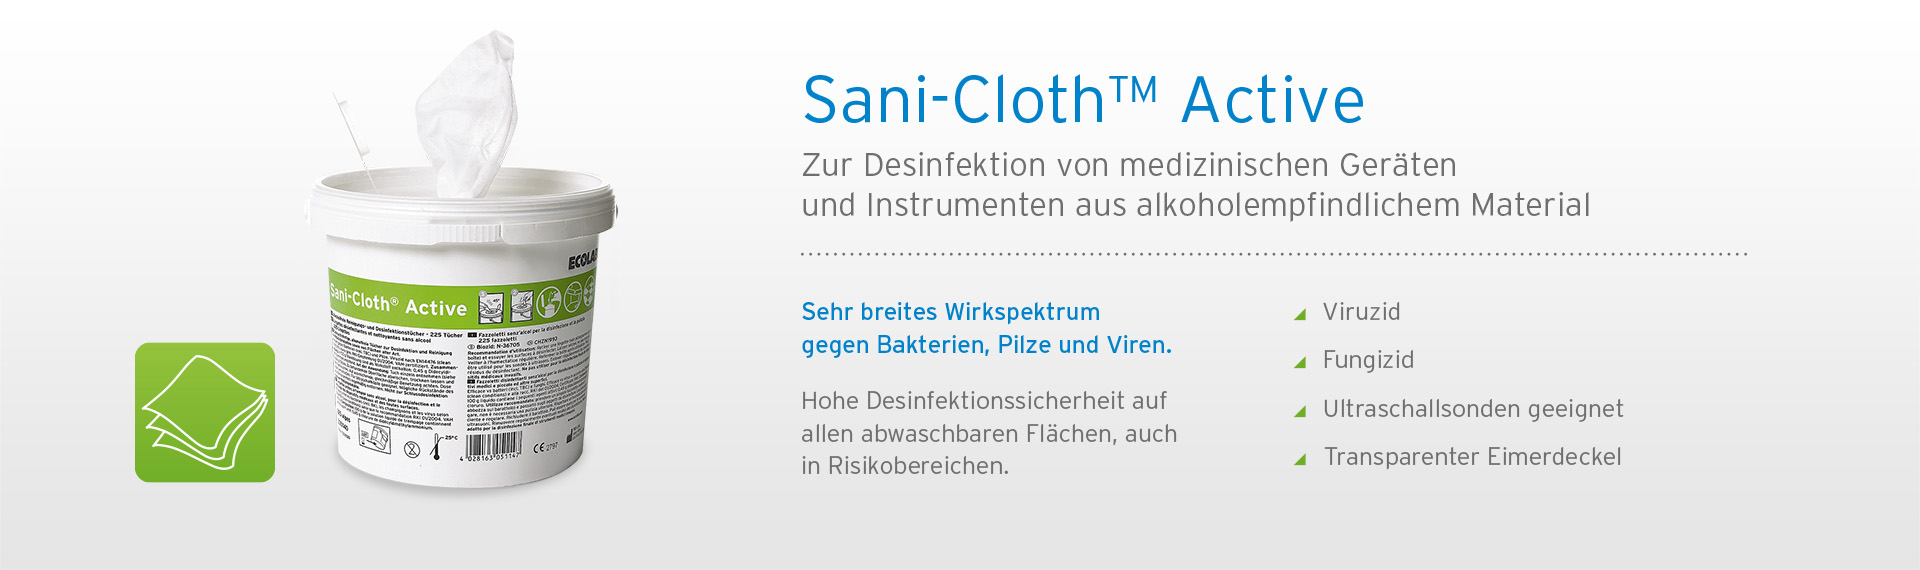 Sani-Cloth Active